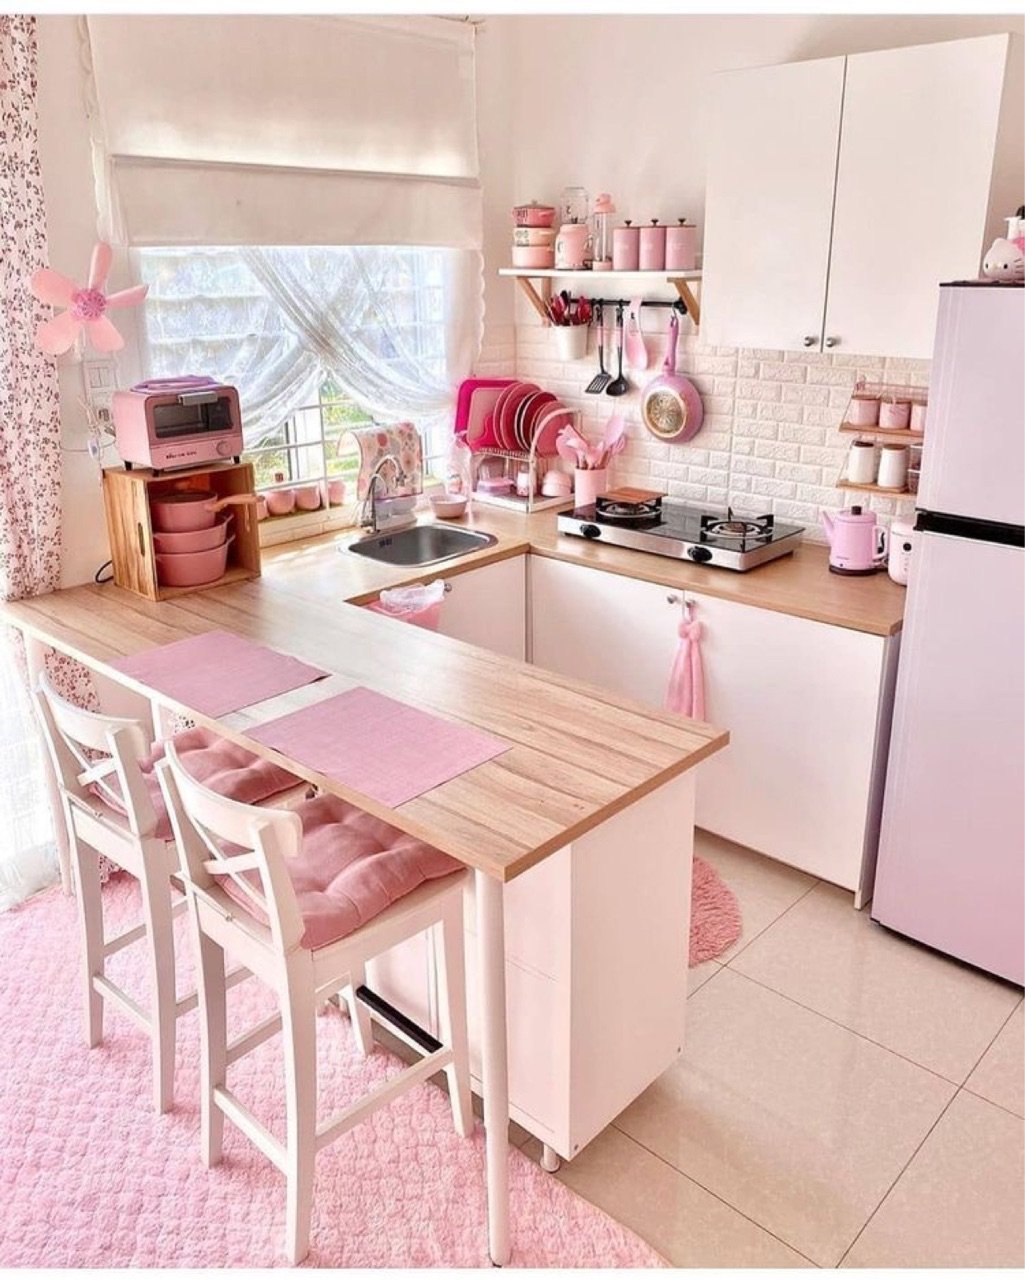 Pink kitchen tools